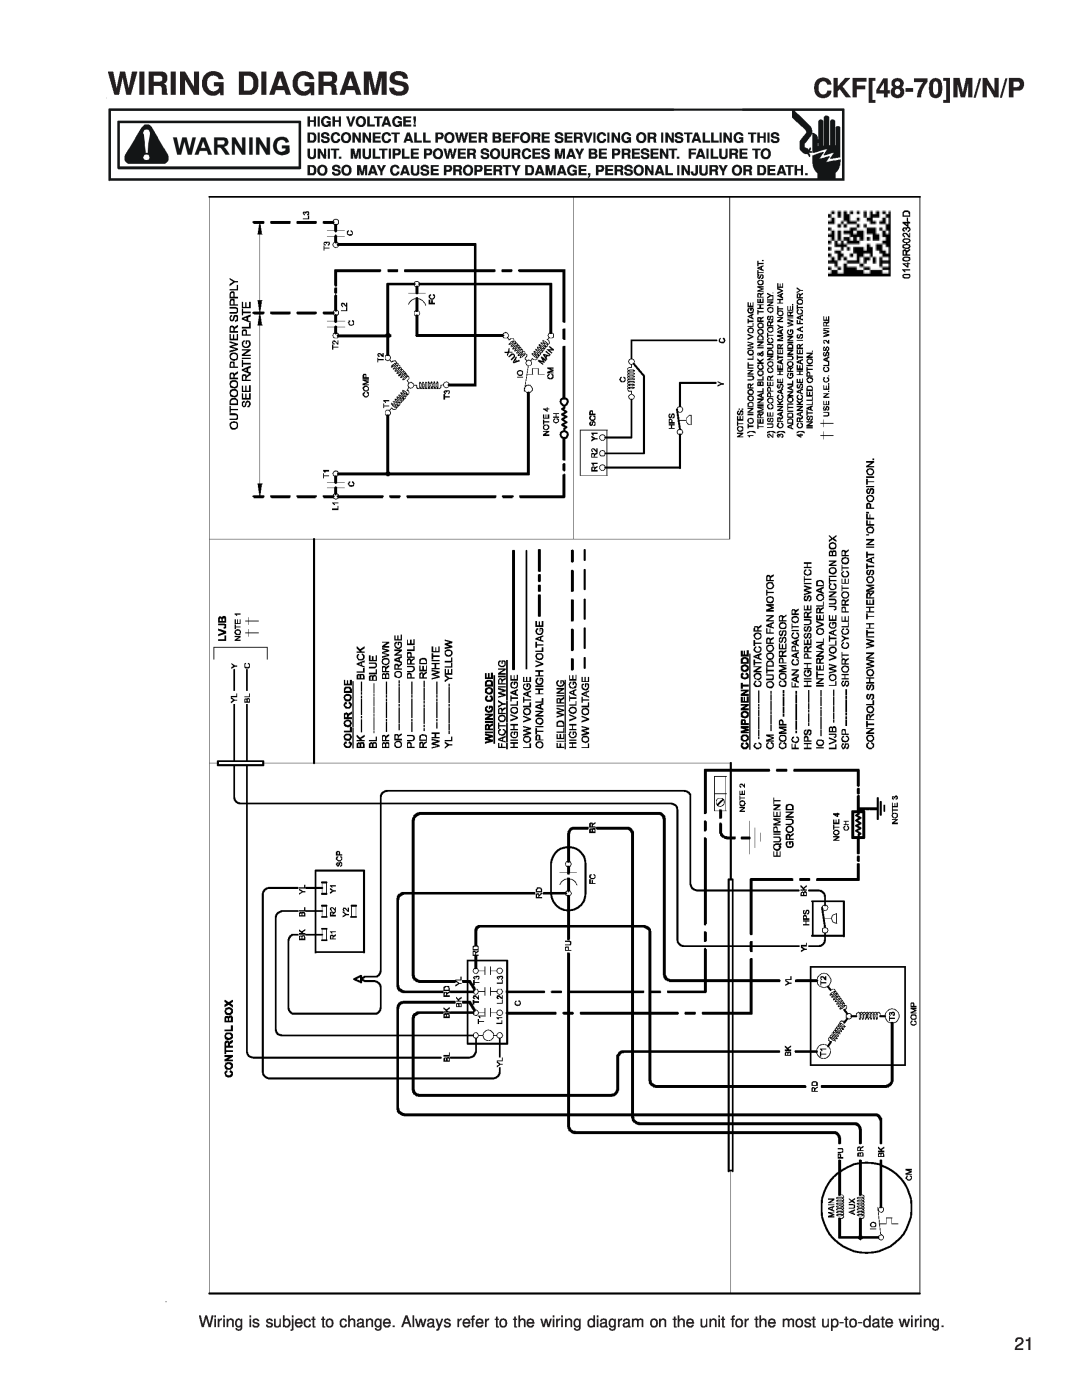 Goodman Mfg CKF50Hz, Condensing Units service manual Wiring Diagrams, CKF48-70M/N/P 